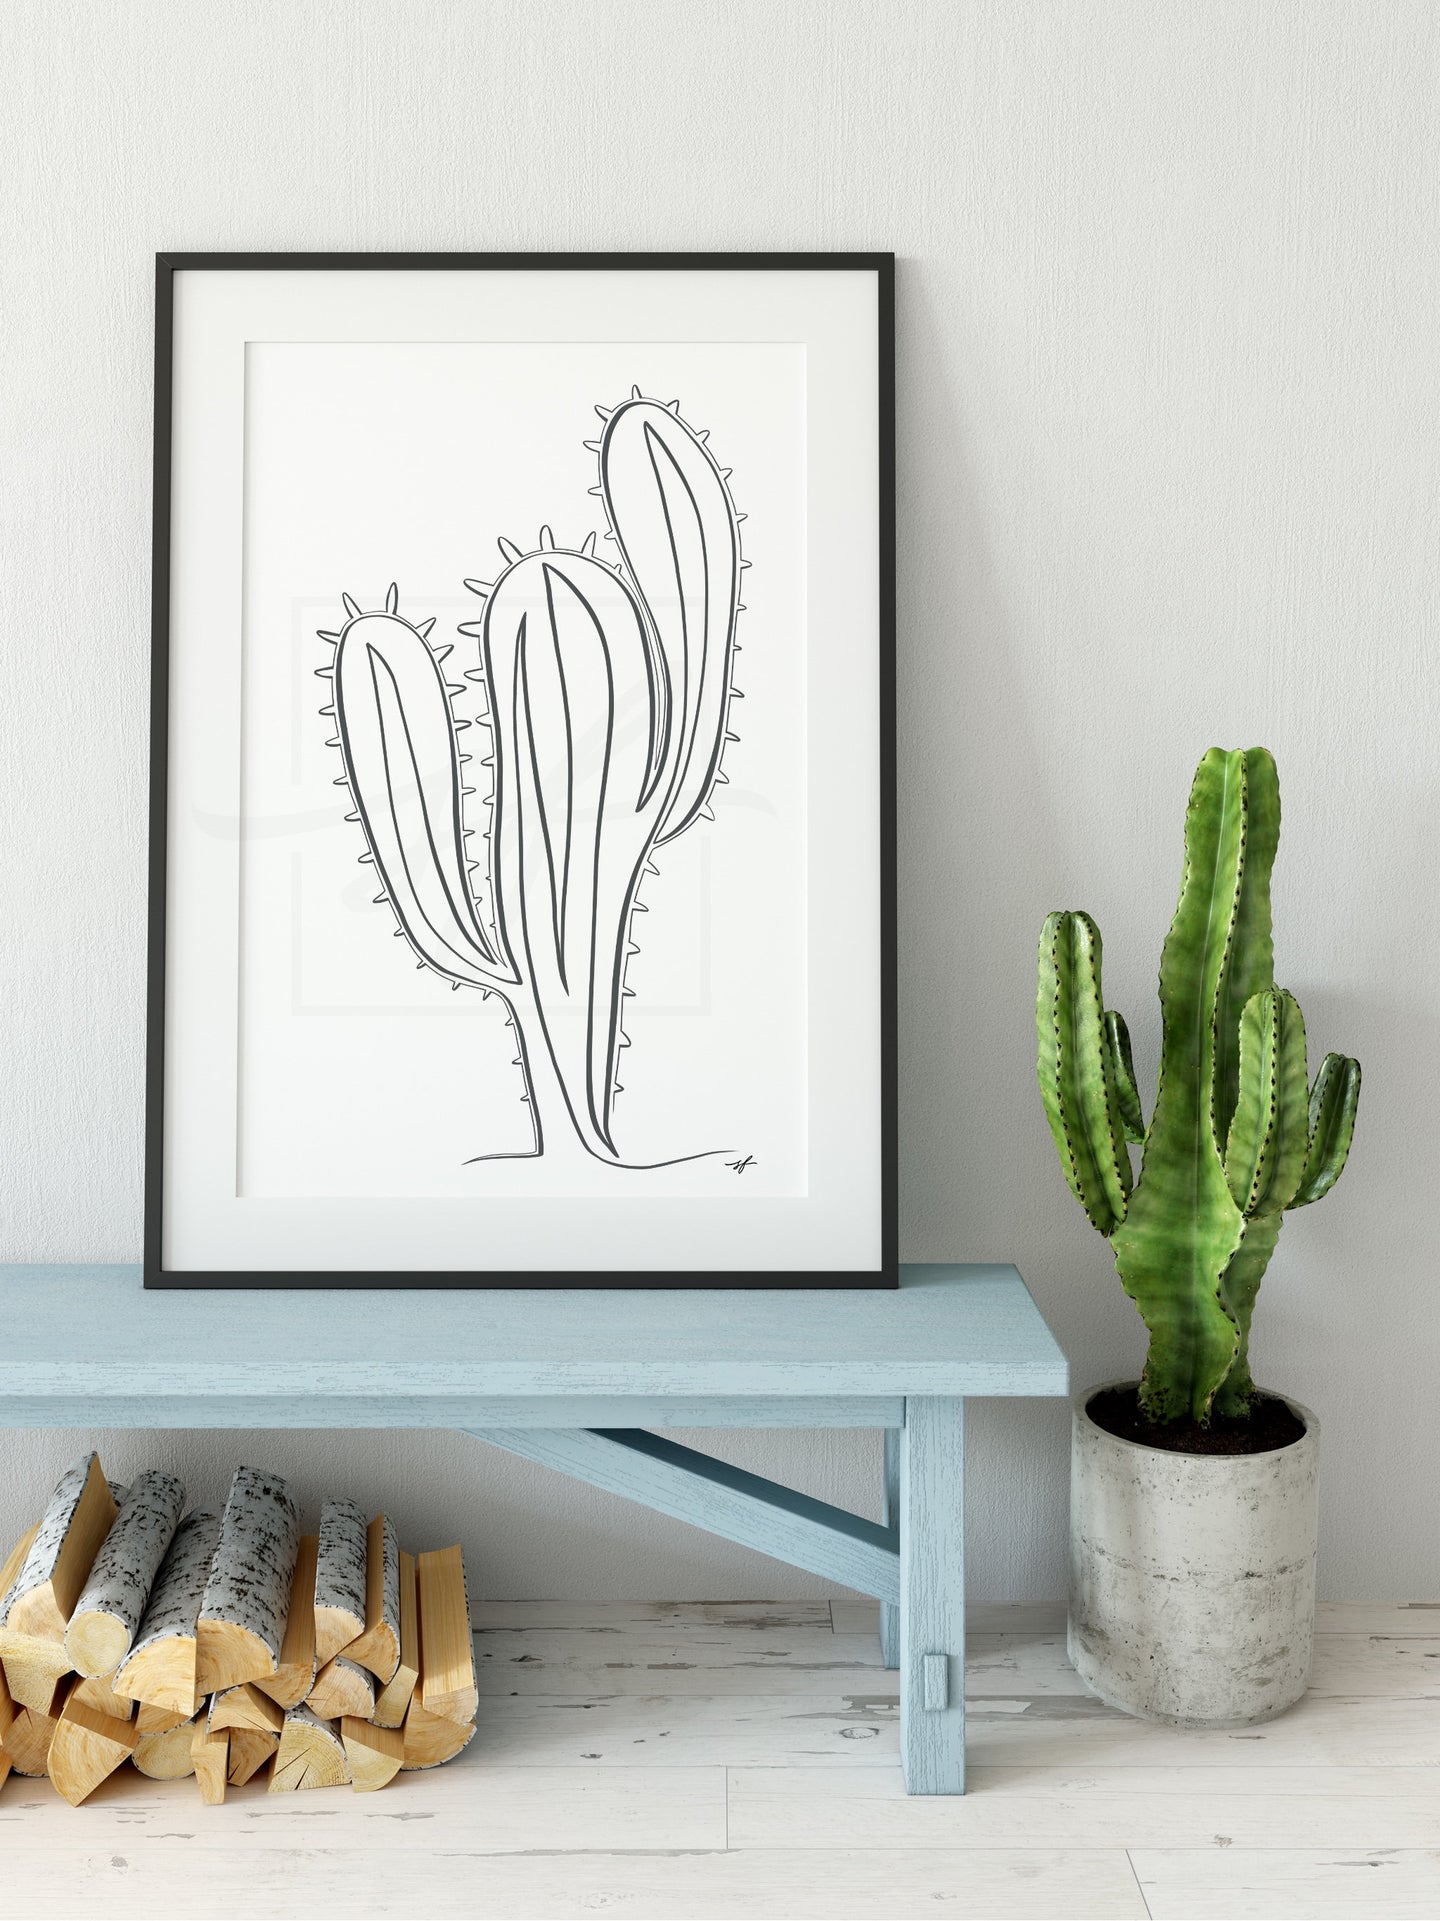 Cactus minimalist one line drawing